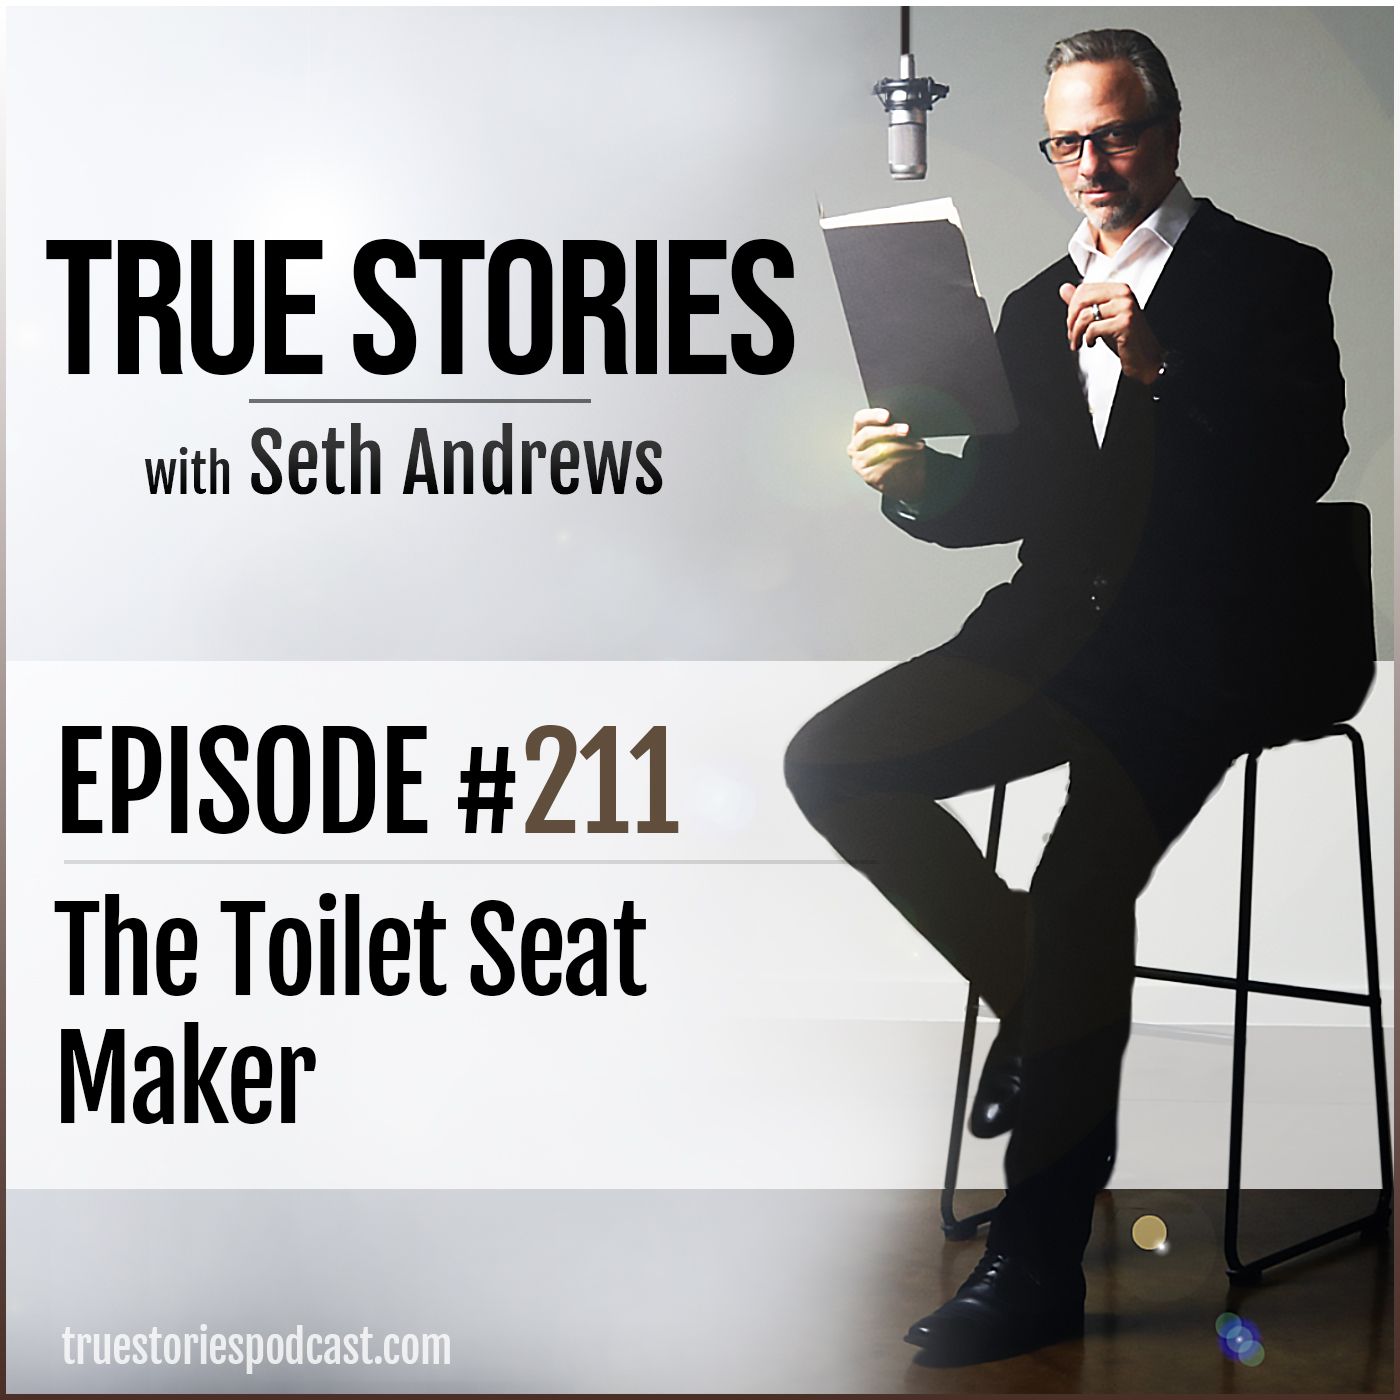 True Stories #211 - The Toilet Seat Maker